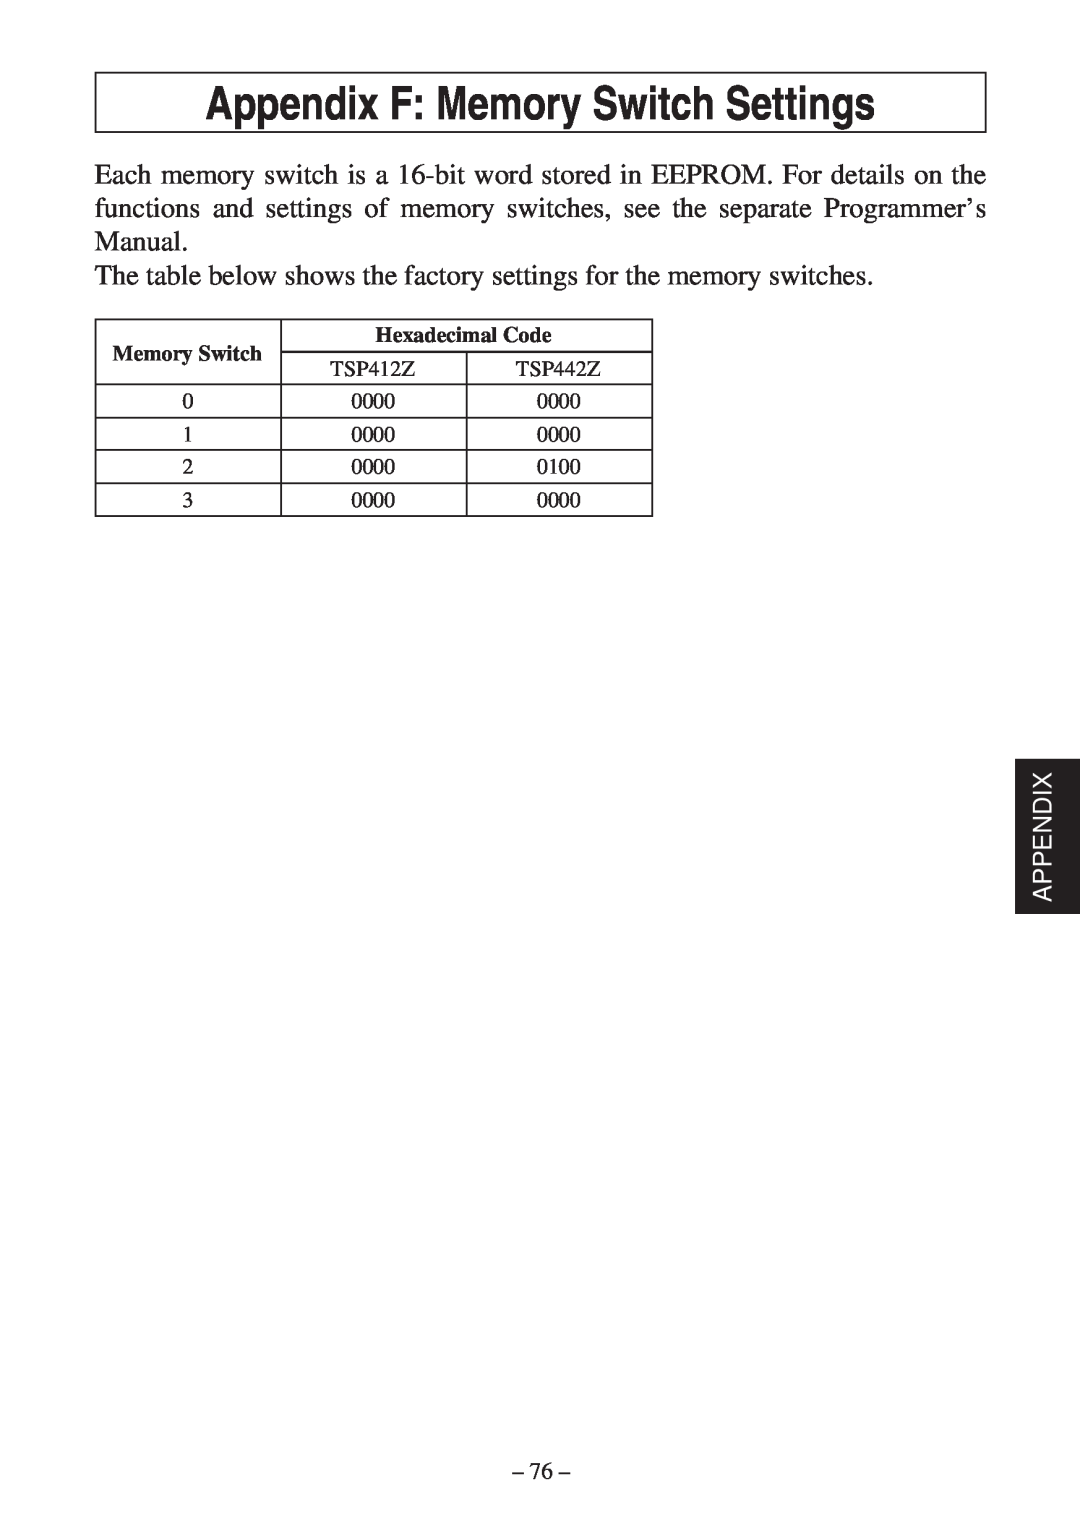 Star Micronics TSP400Z Series user manual Appendix F Memory Switch Settings, Hexadecimal Code 